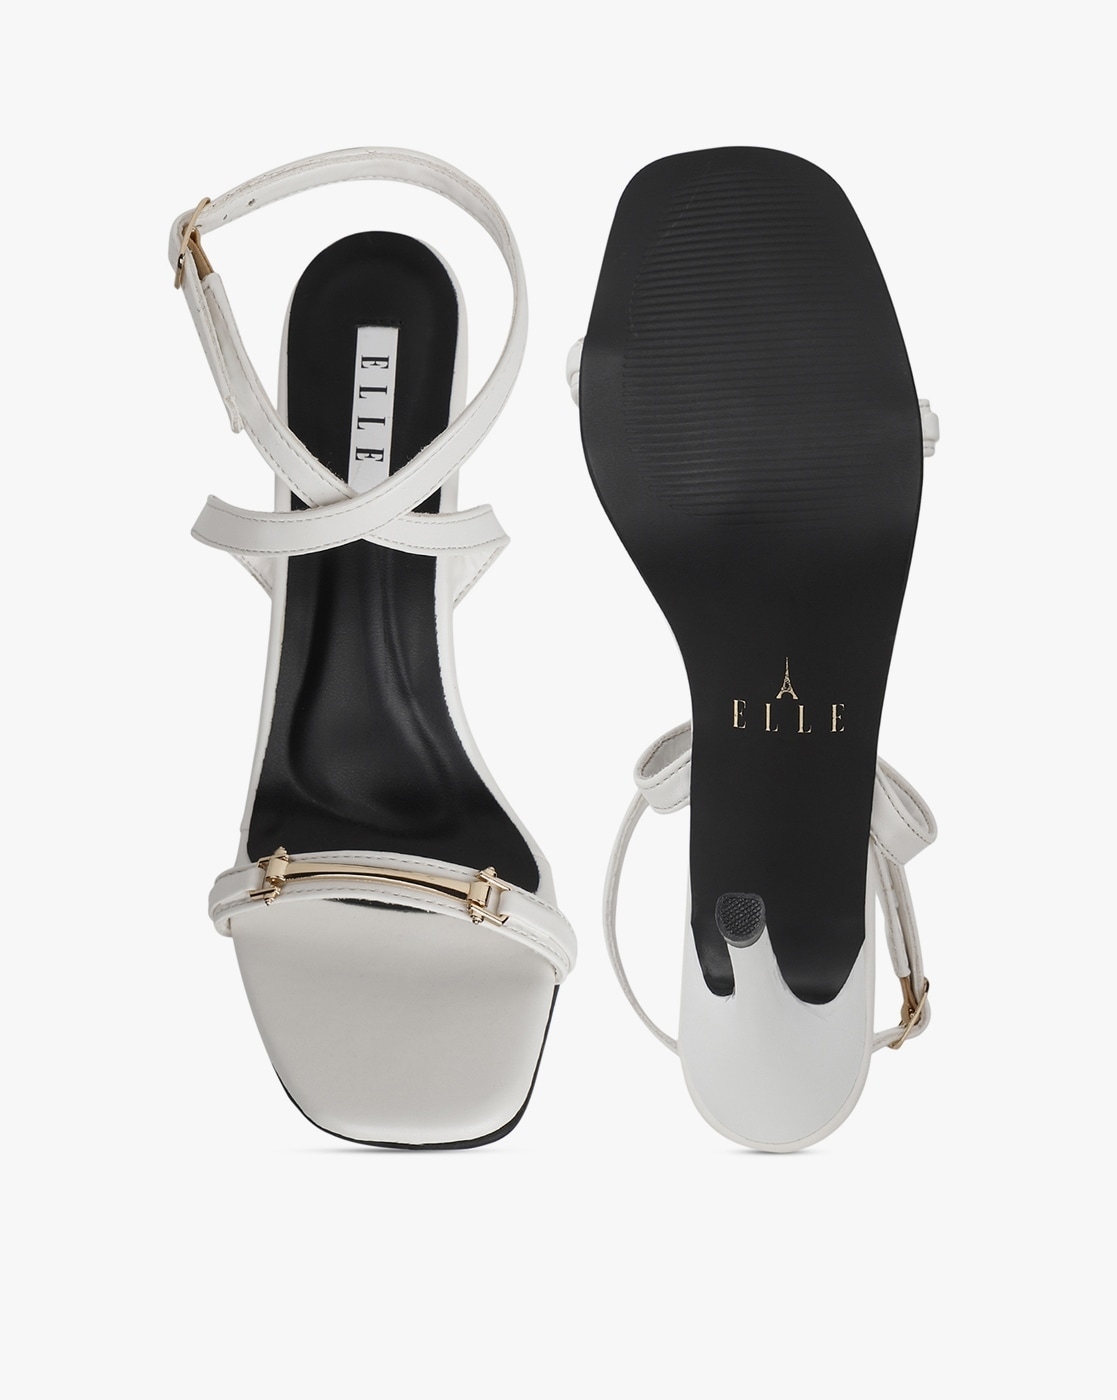 Buy Do Bhai Stylish Western Embellished Silver Heels for Women & Girls/UK3  at Amazon.in